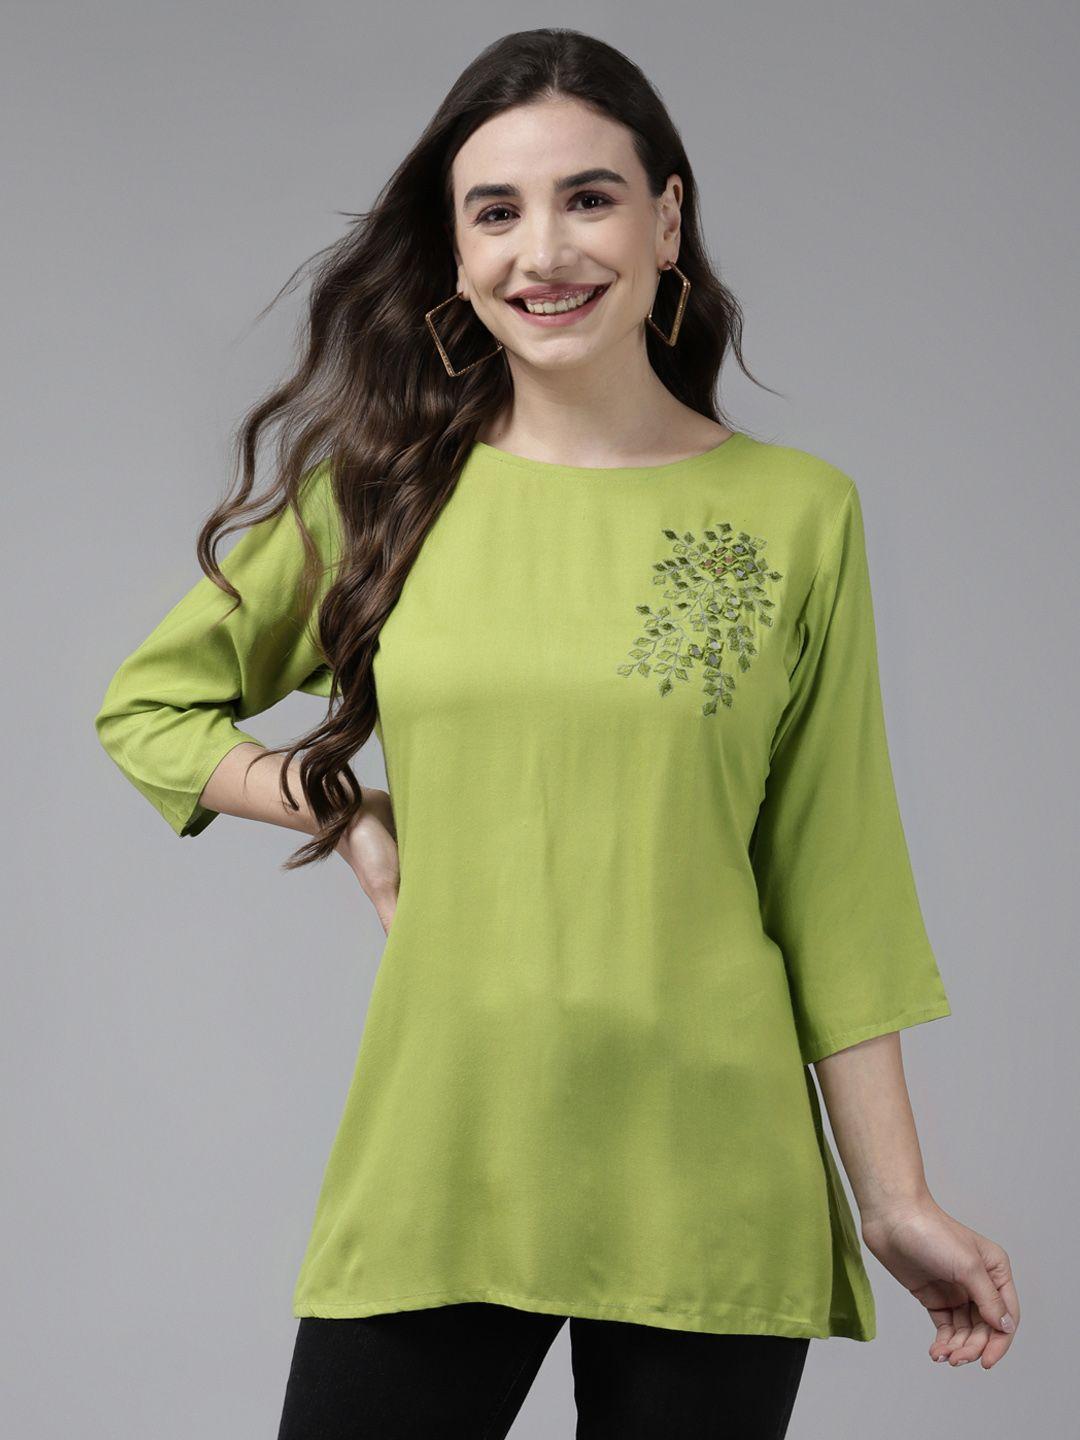 aarika-lime-green-geometric-embroidered-georgette-top